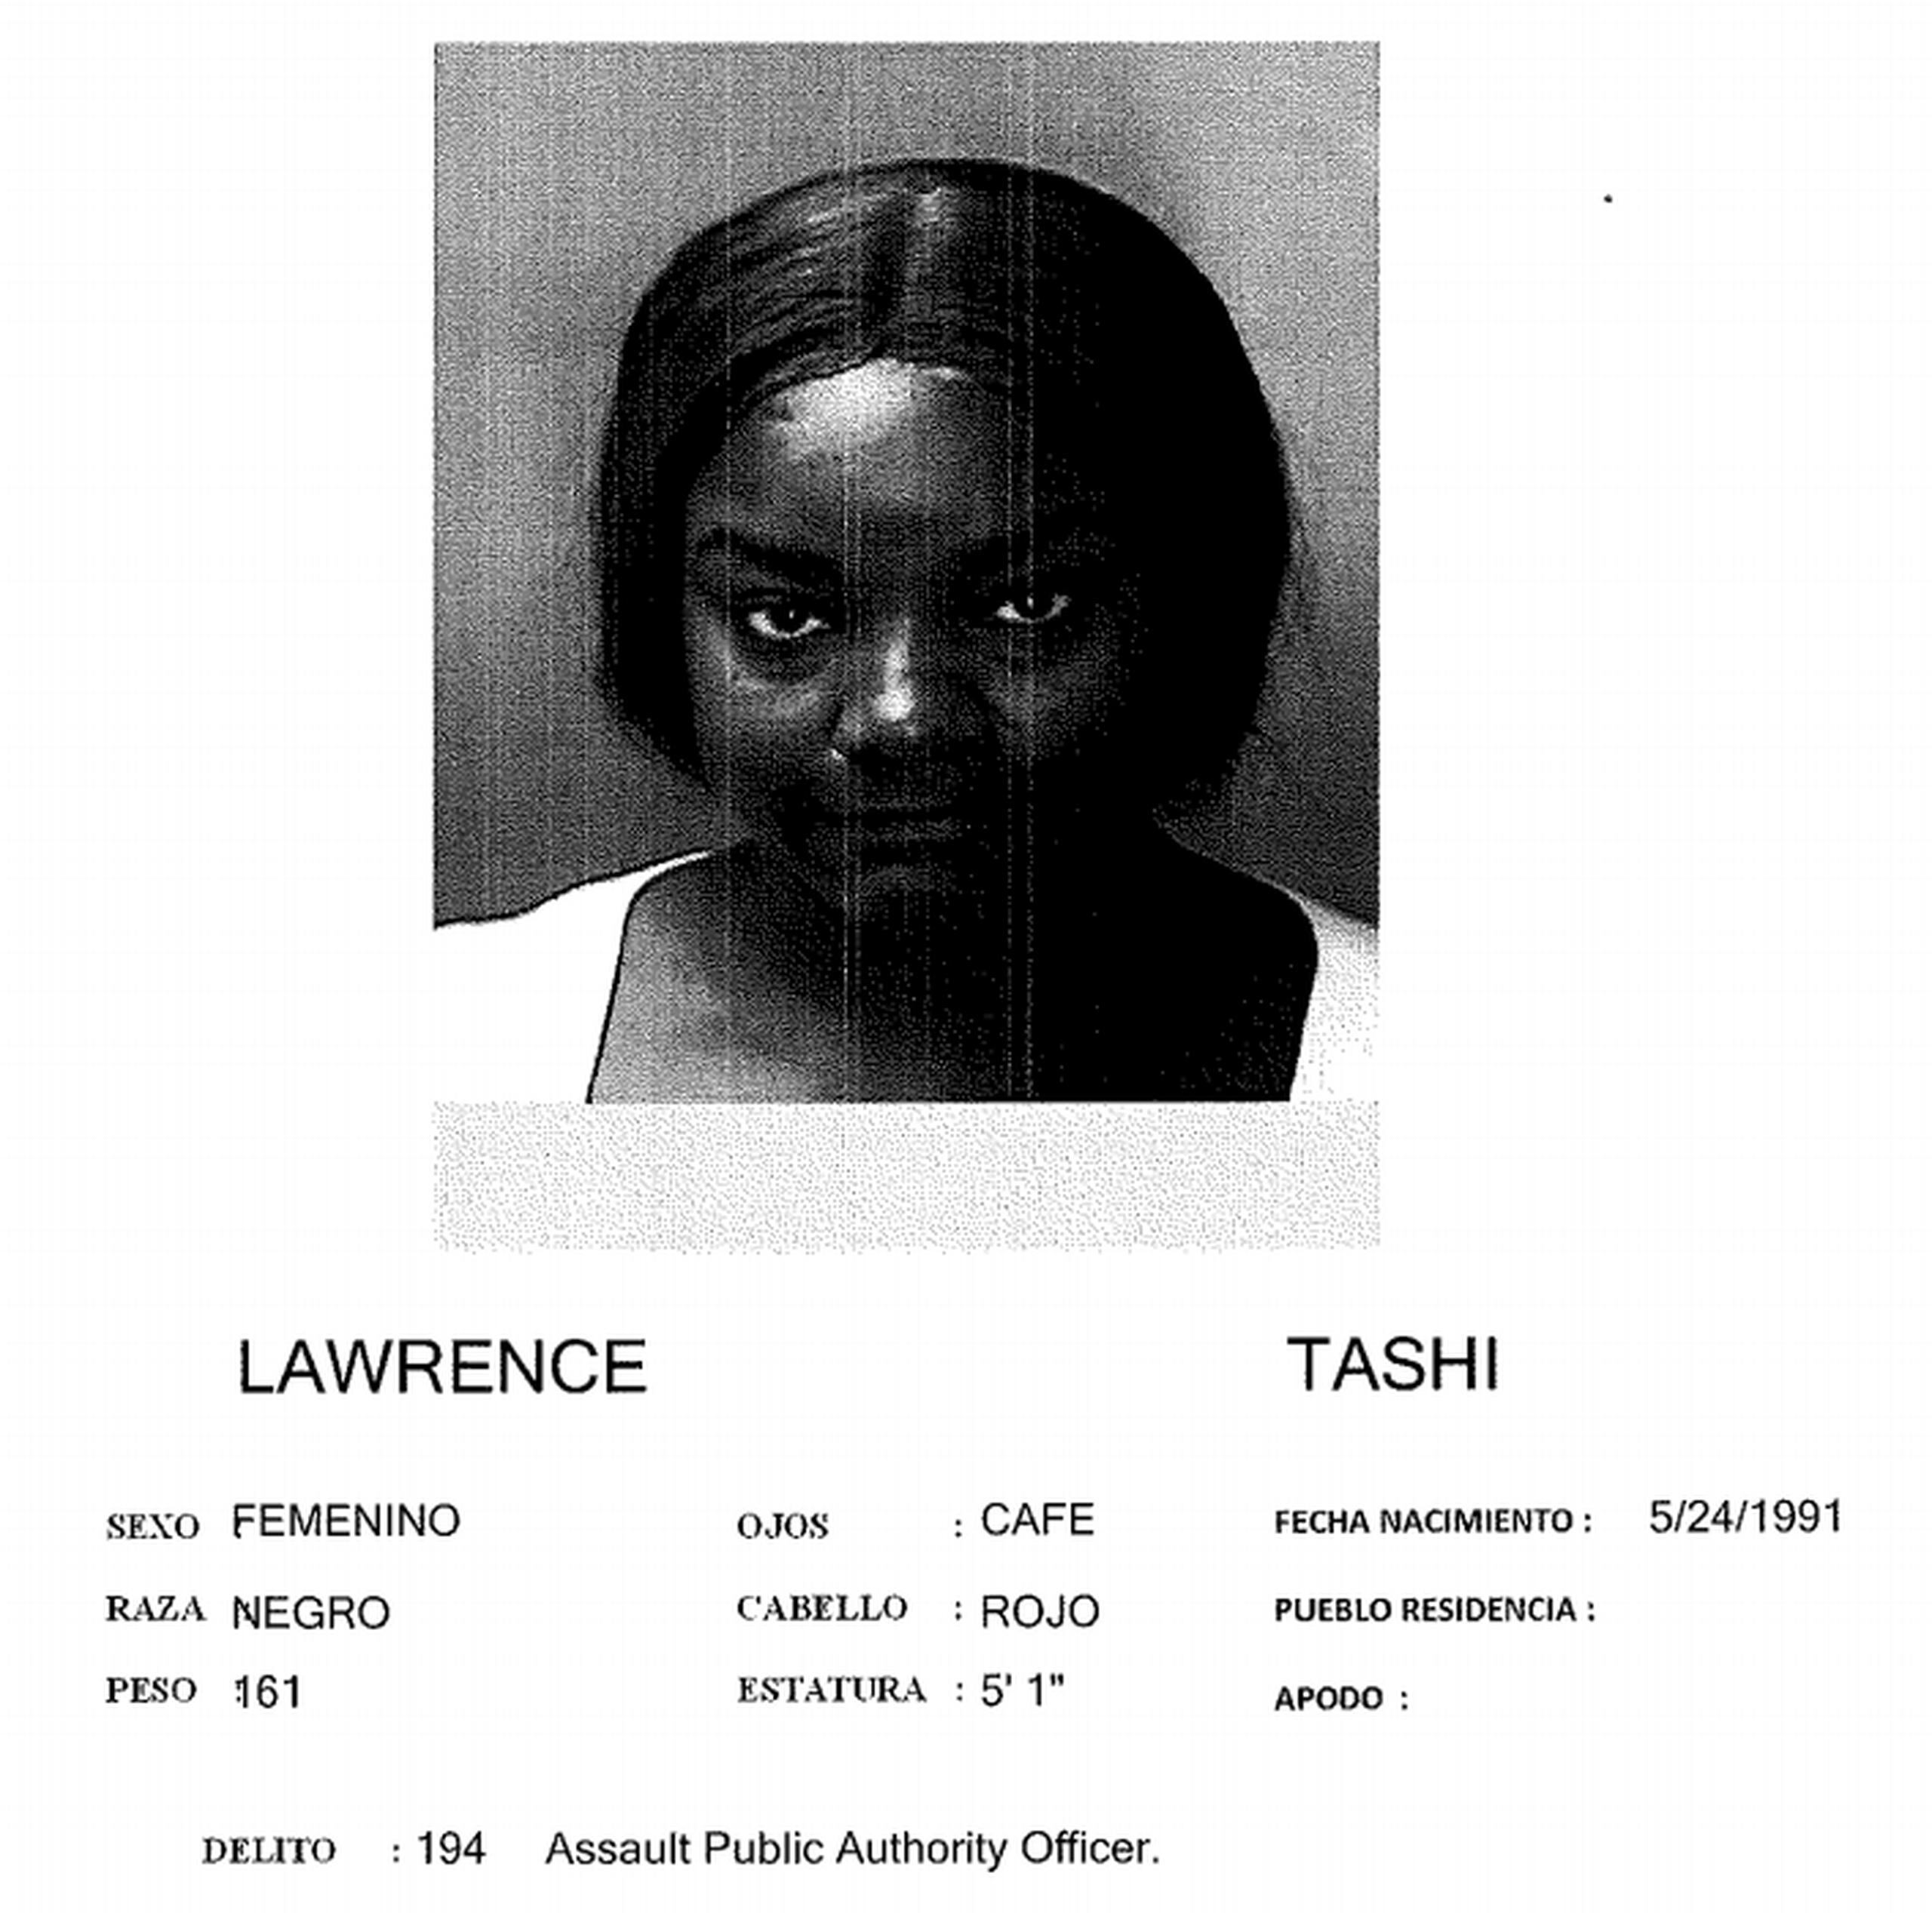 Tashi Lawrence enfrenta cargos por agresión contra un funcionario público.